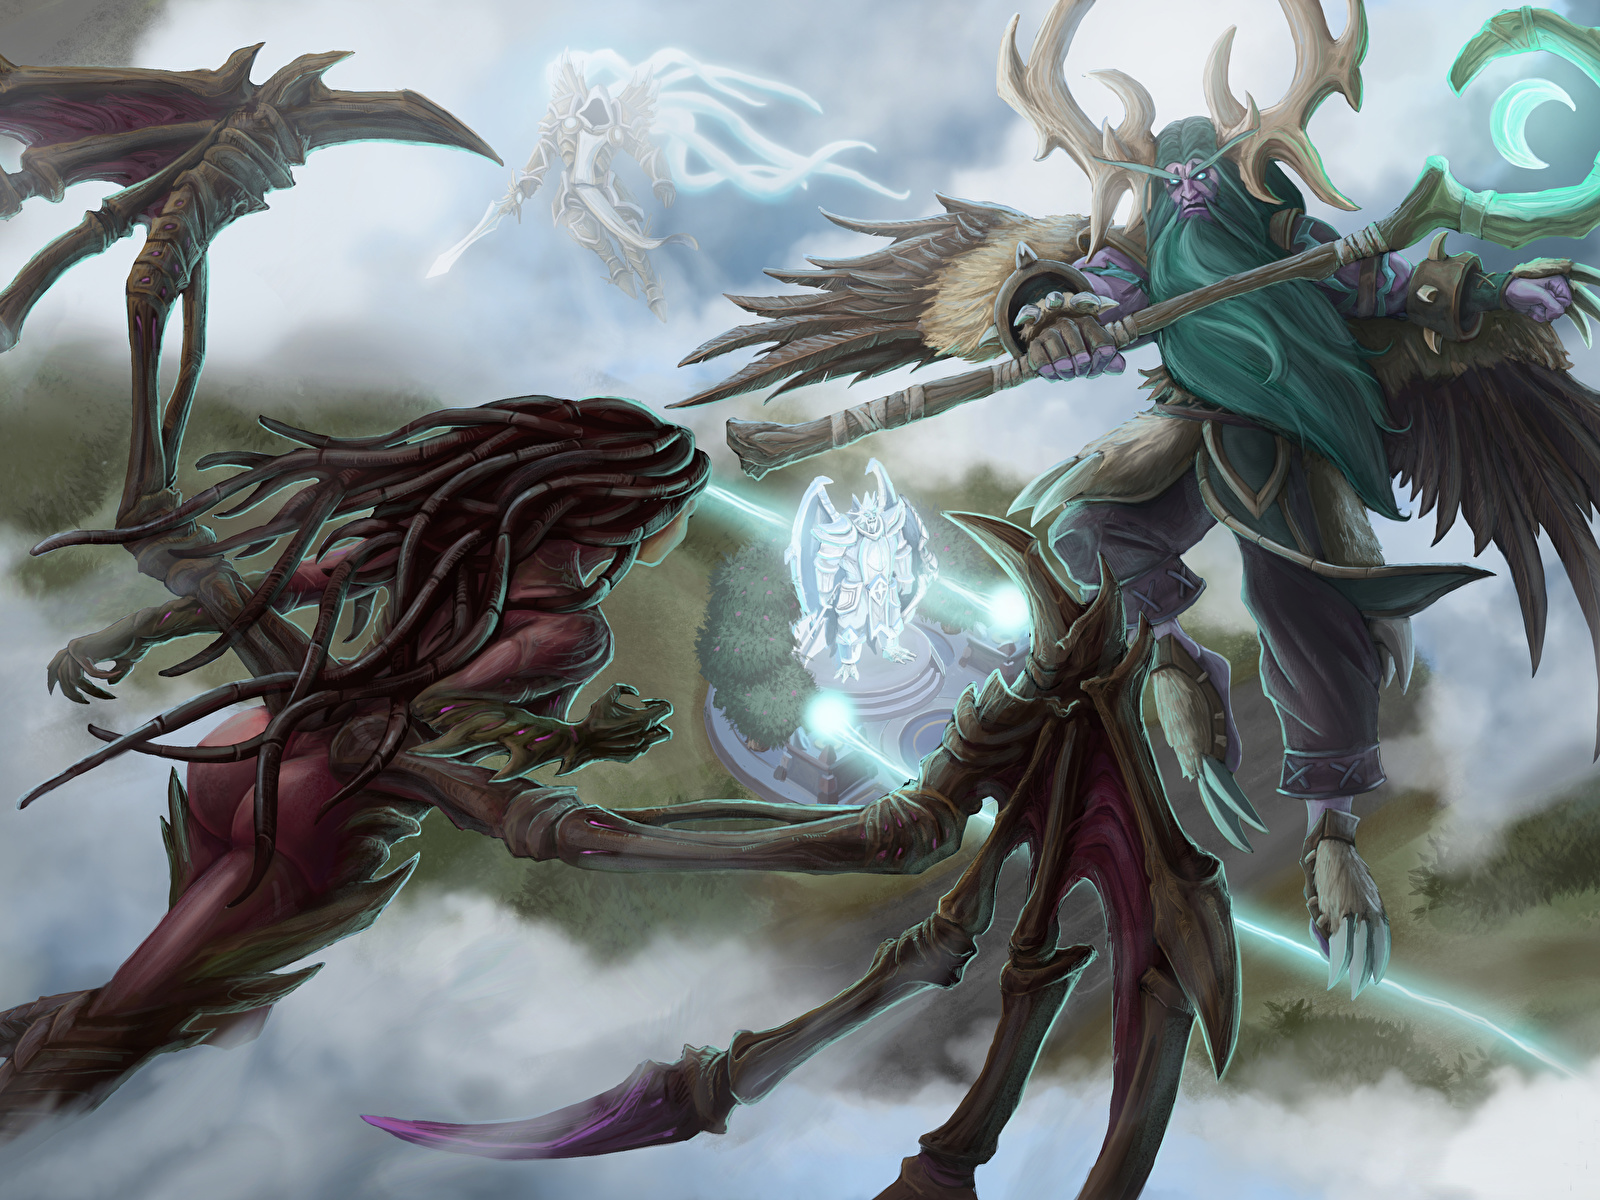 Wallpaper Sarah Kerrigan Heroes of the Storm Wings Archangel of Justice, Malfurion, Tyrael Fantasy Games 1600x1200 vdeo game